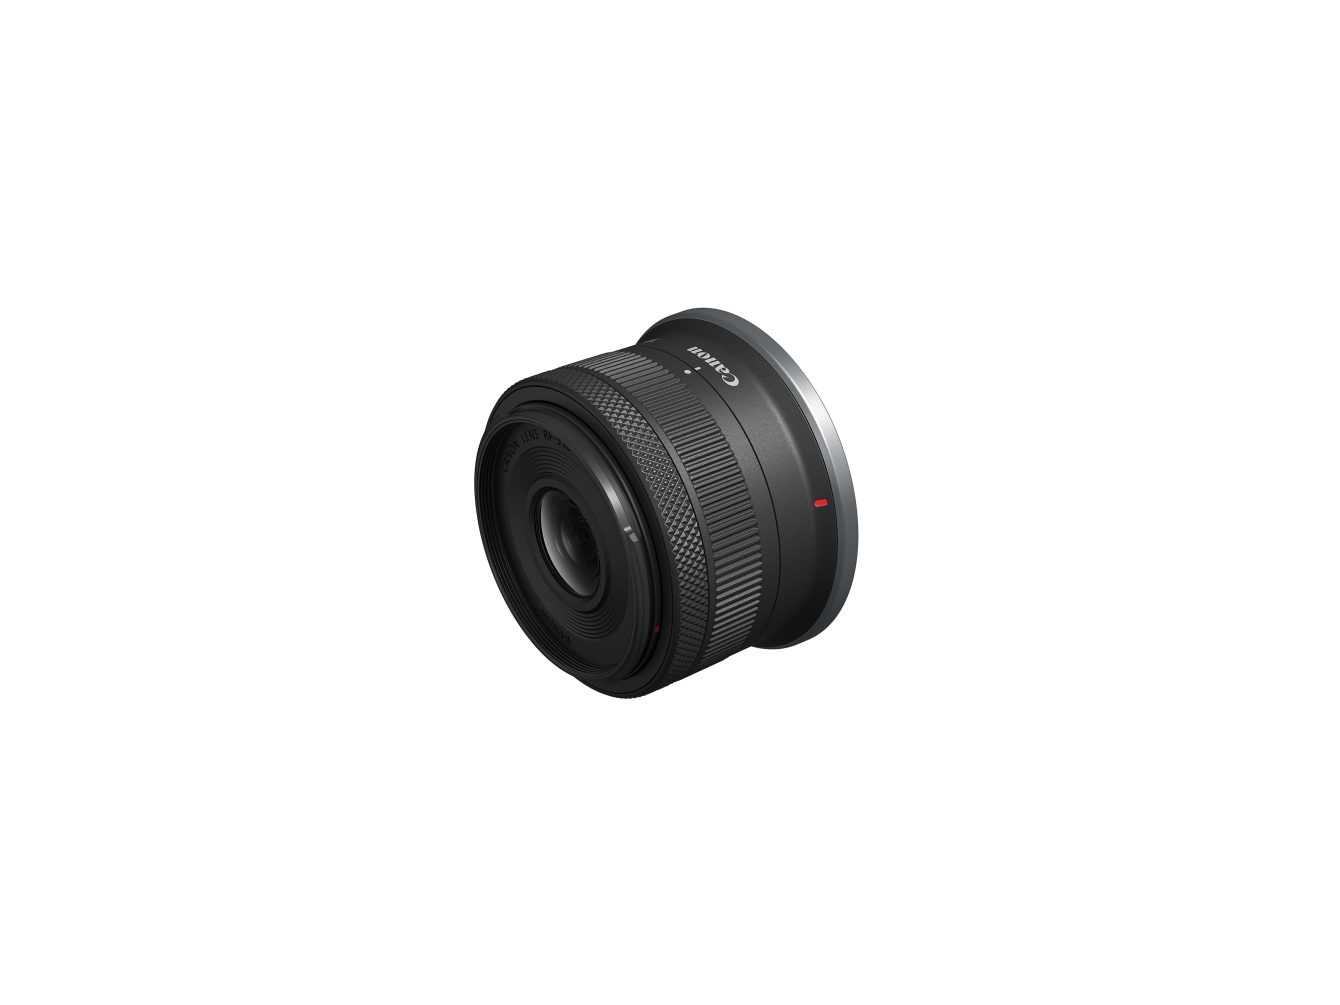 Canon: three new RF lenses announced